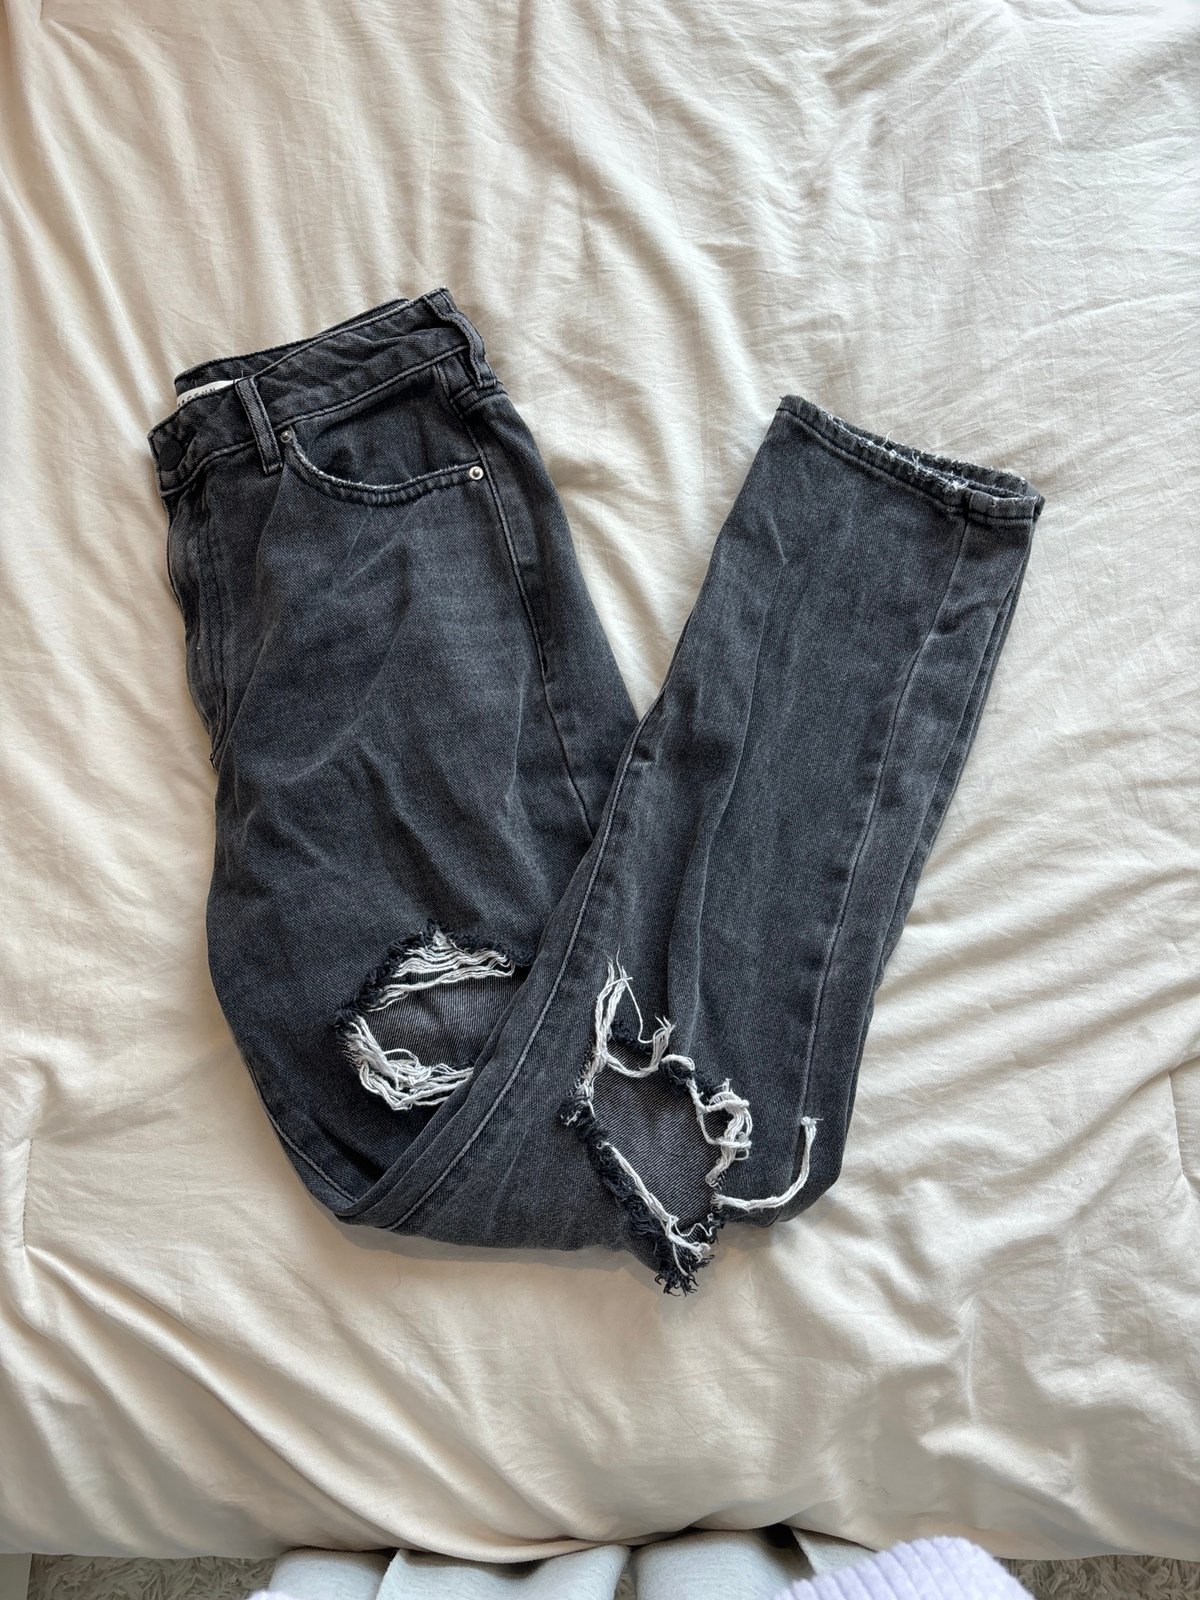 Affordable PacSun Mom Jeans pr50lidra Cheap